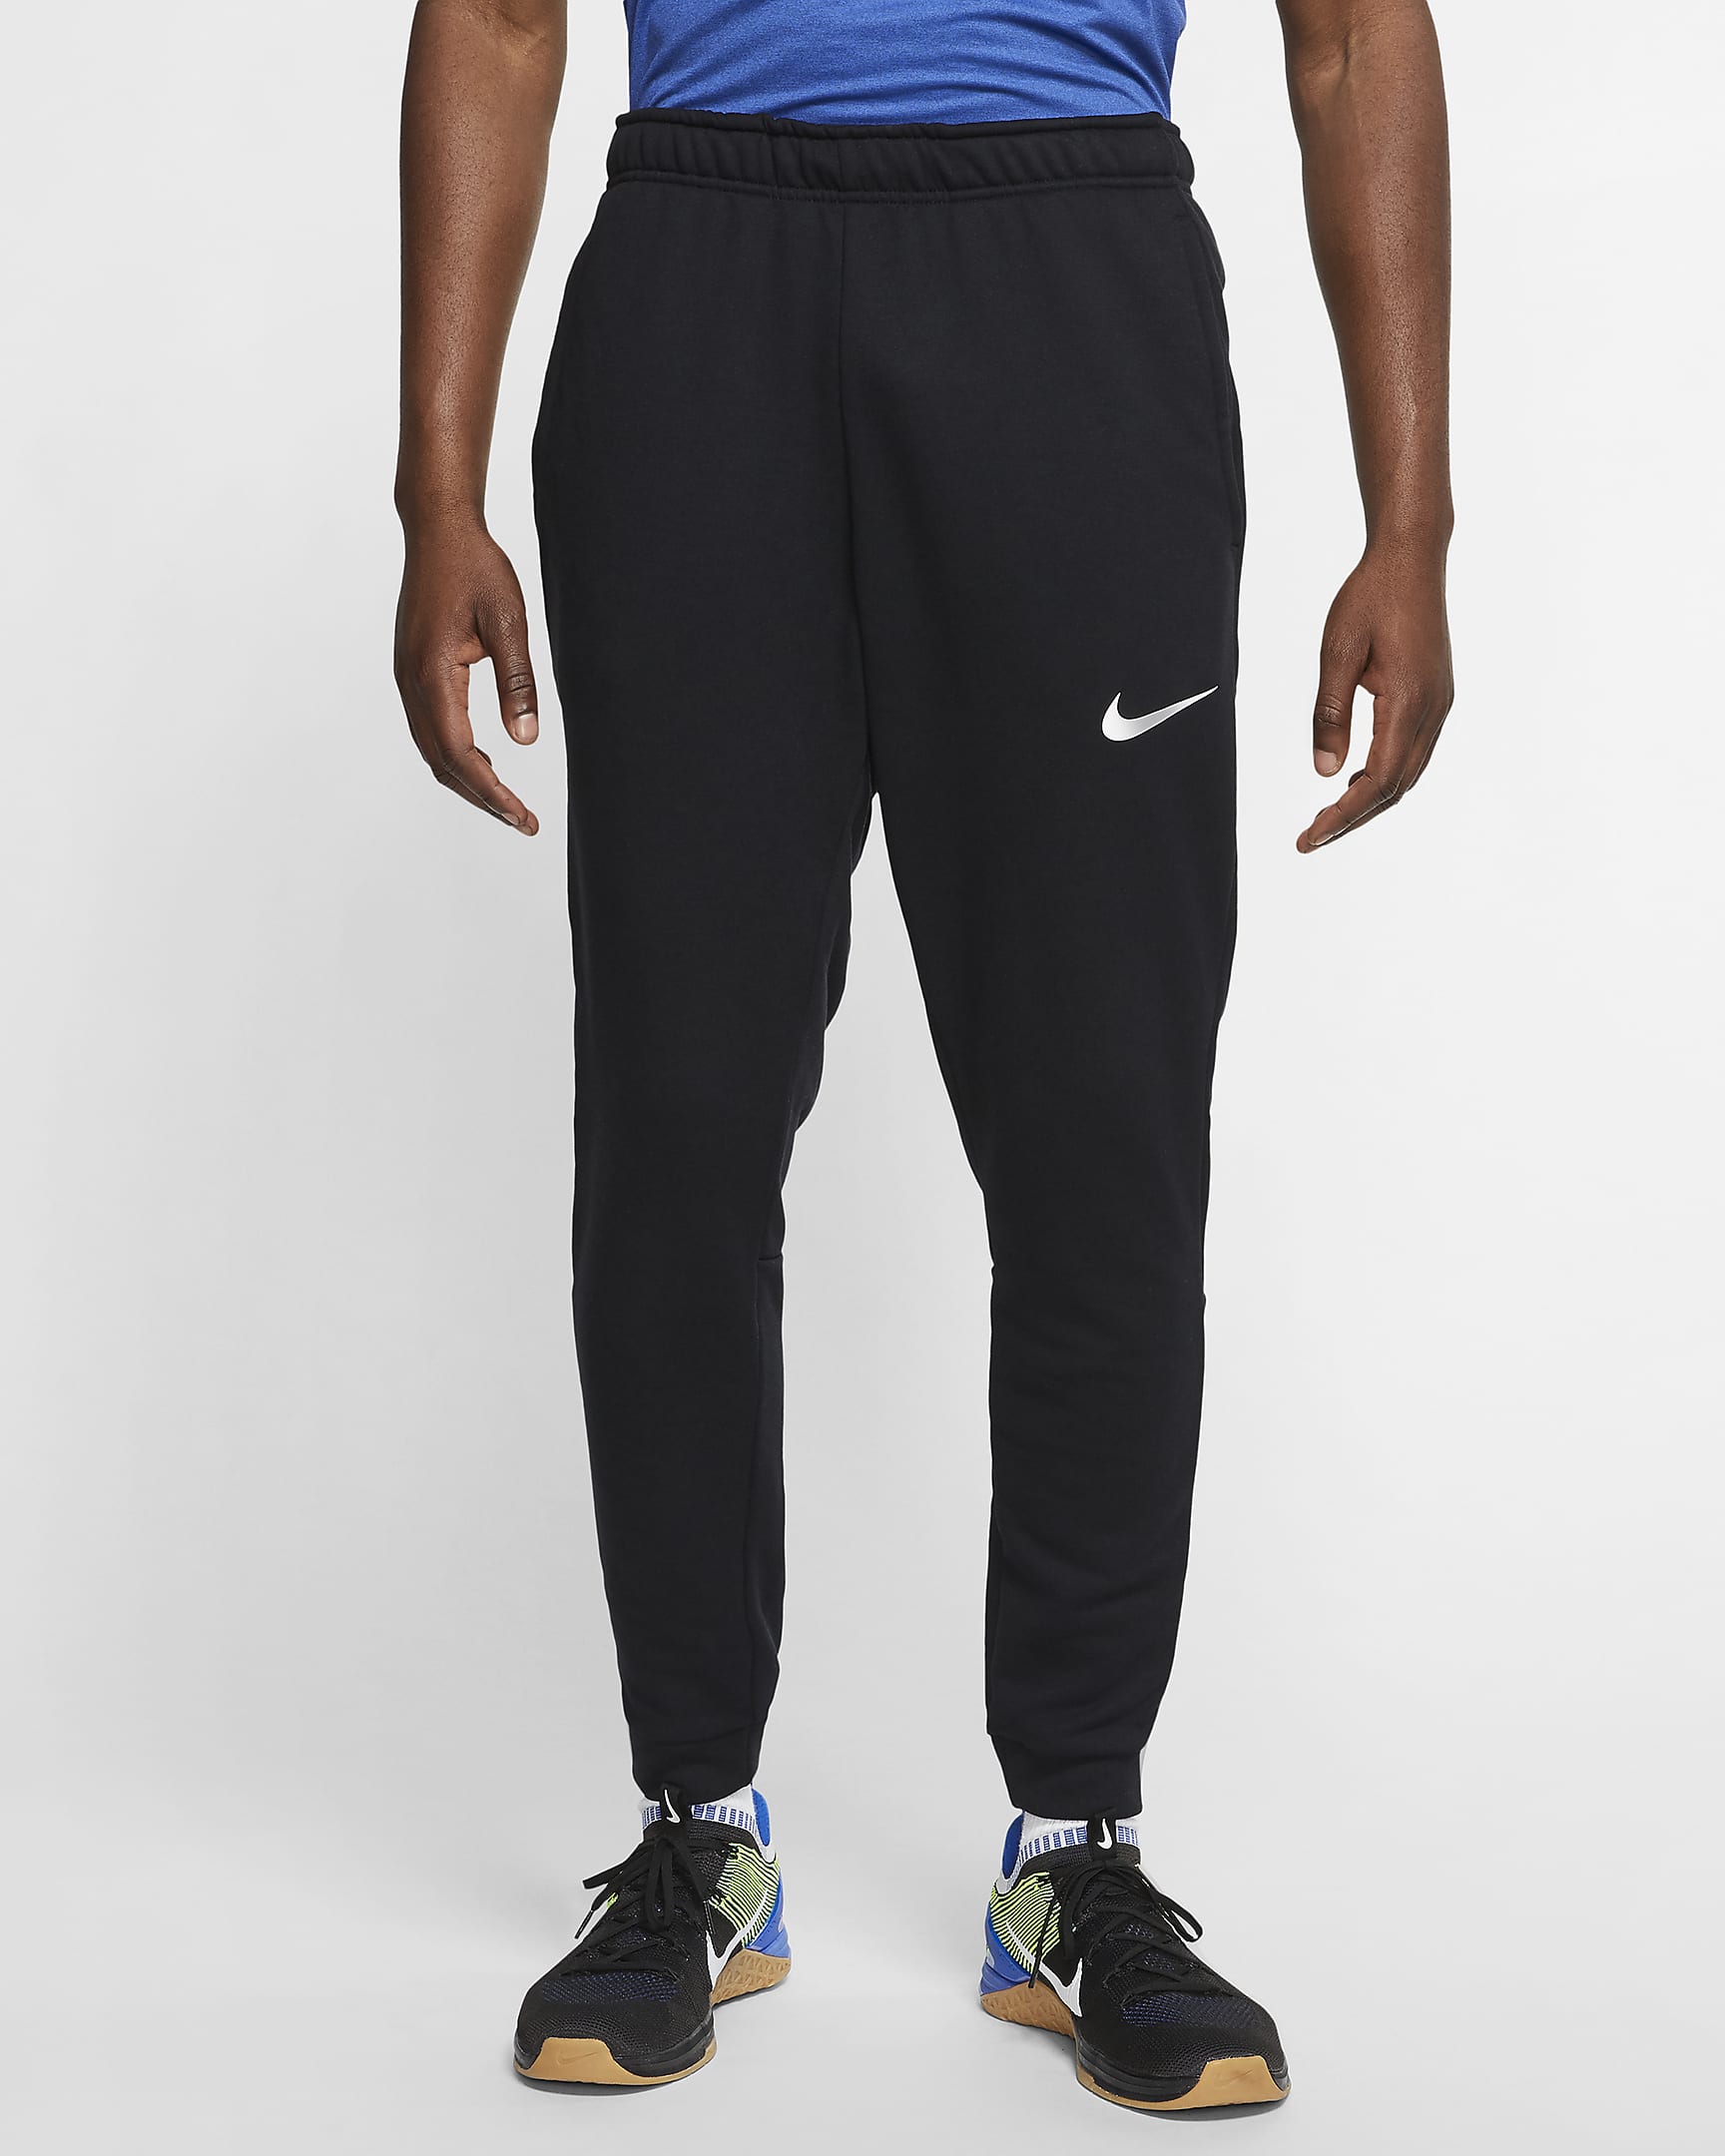 Nike Dri-FIT Fleece Training Pants .38